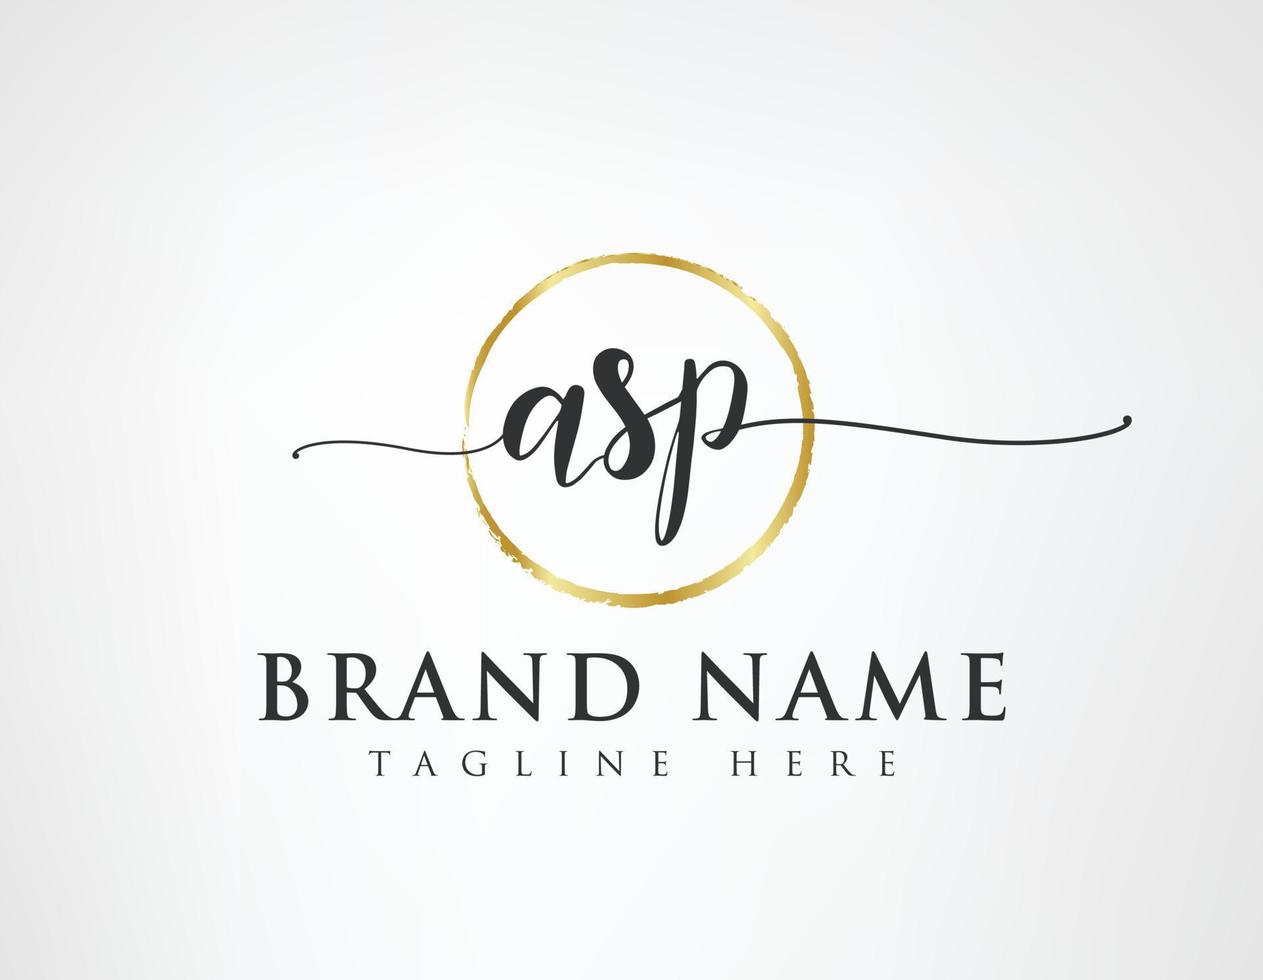 A S P Initial luxury Elegant Logo Template vector